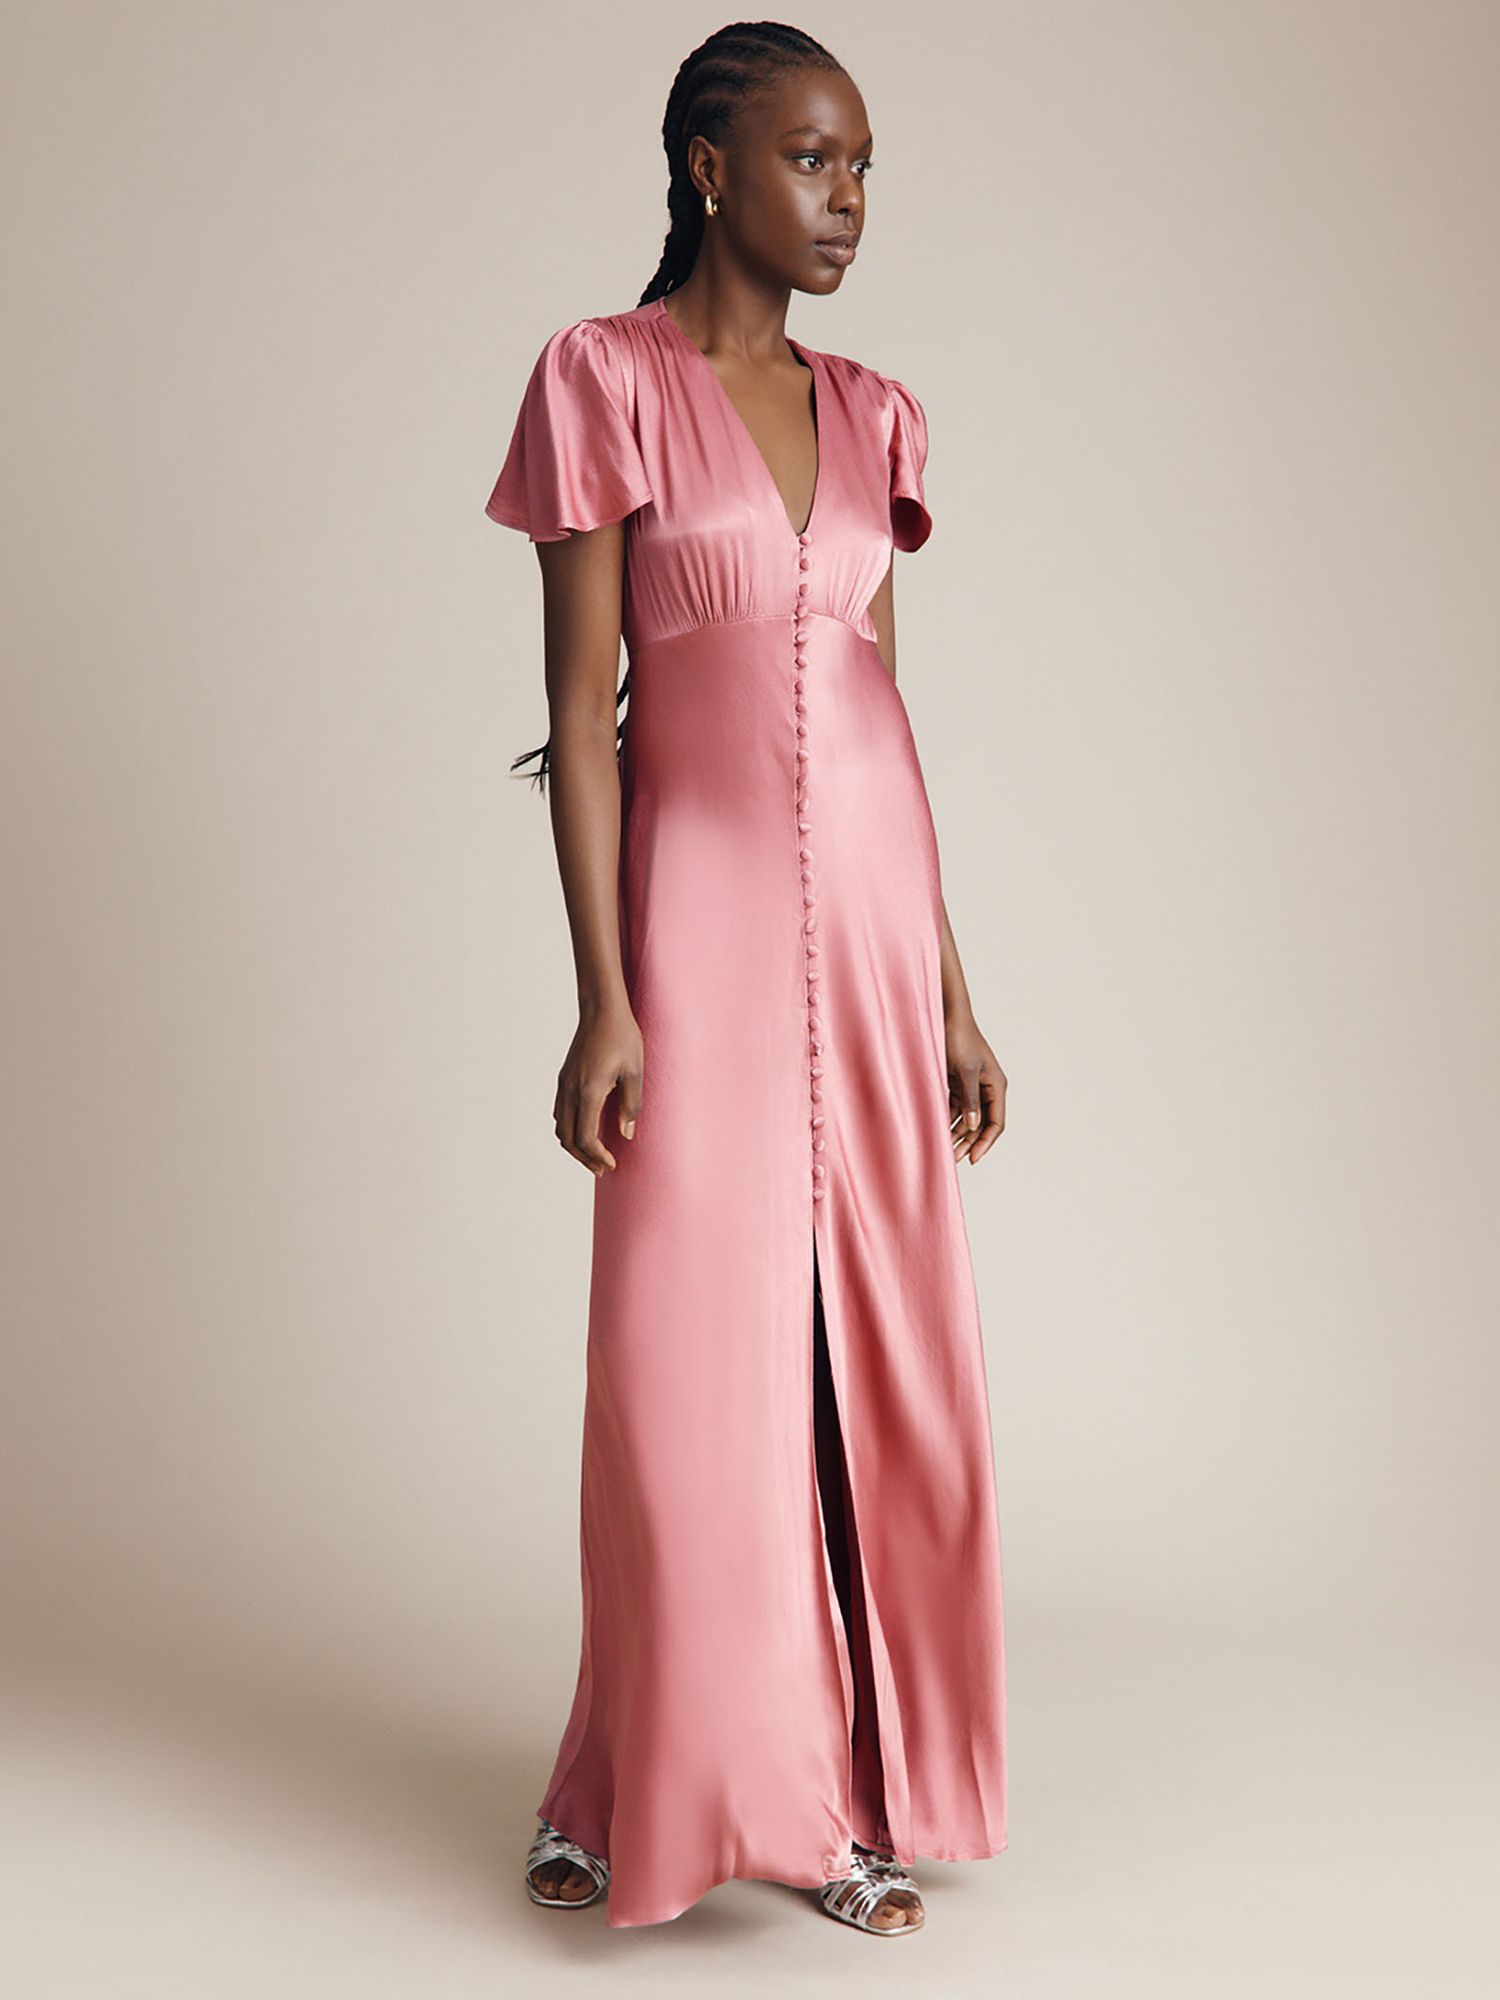 Ghost Delphine Satin Bridesmaid Maxi Dress, Light Pink, XS